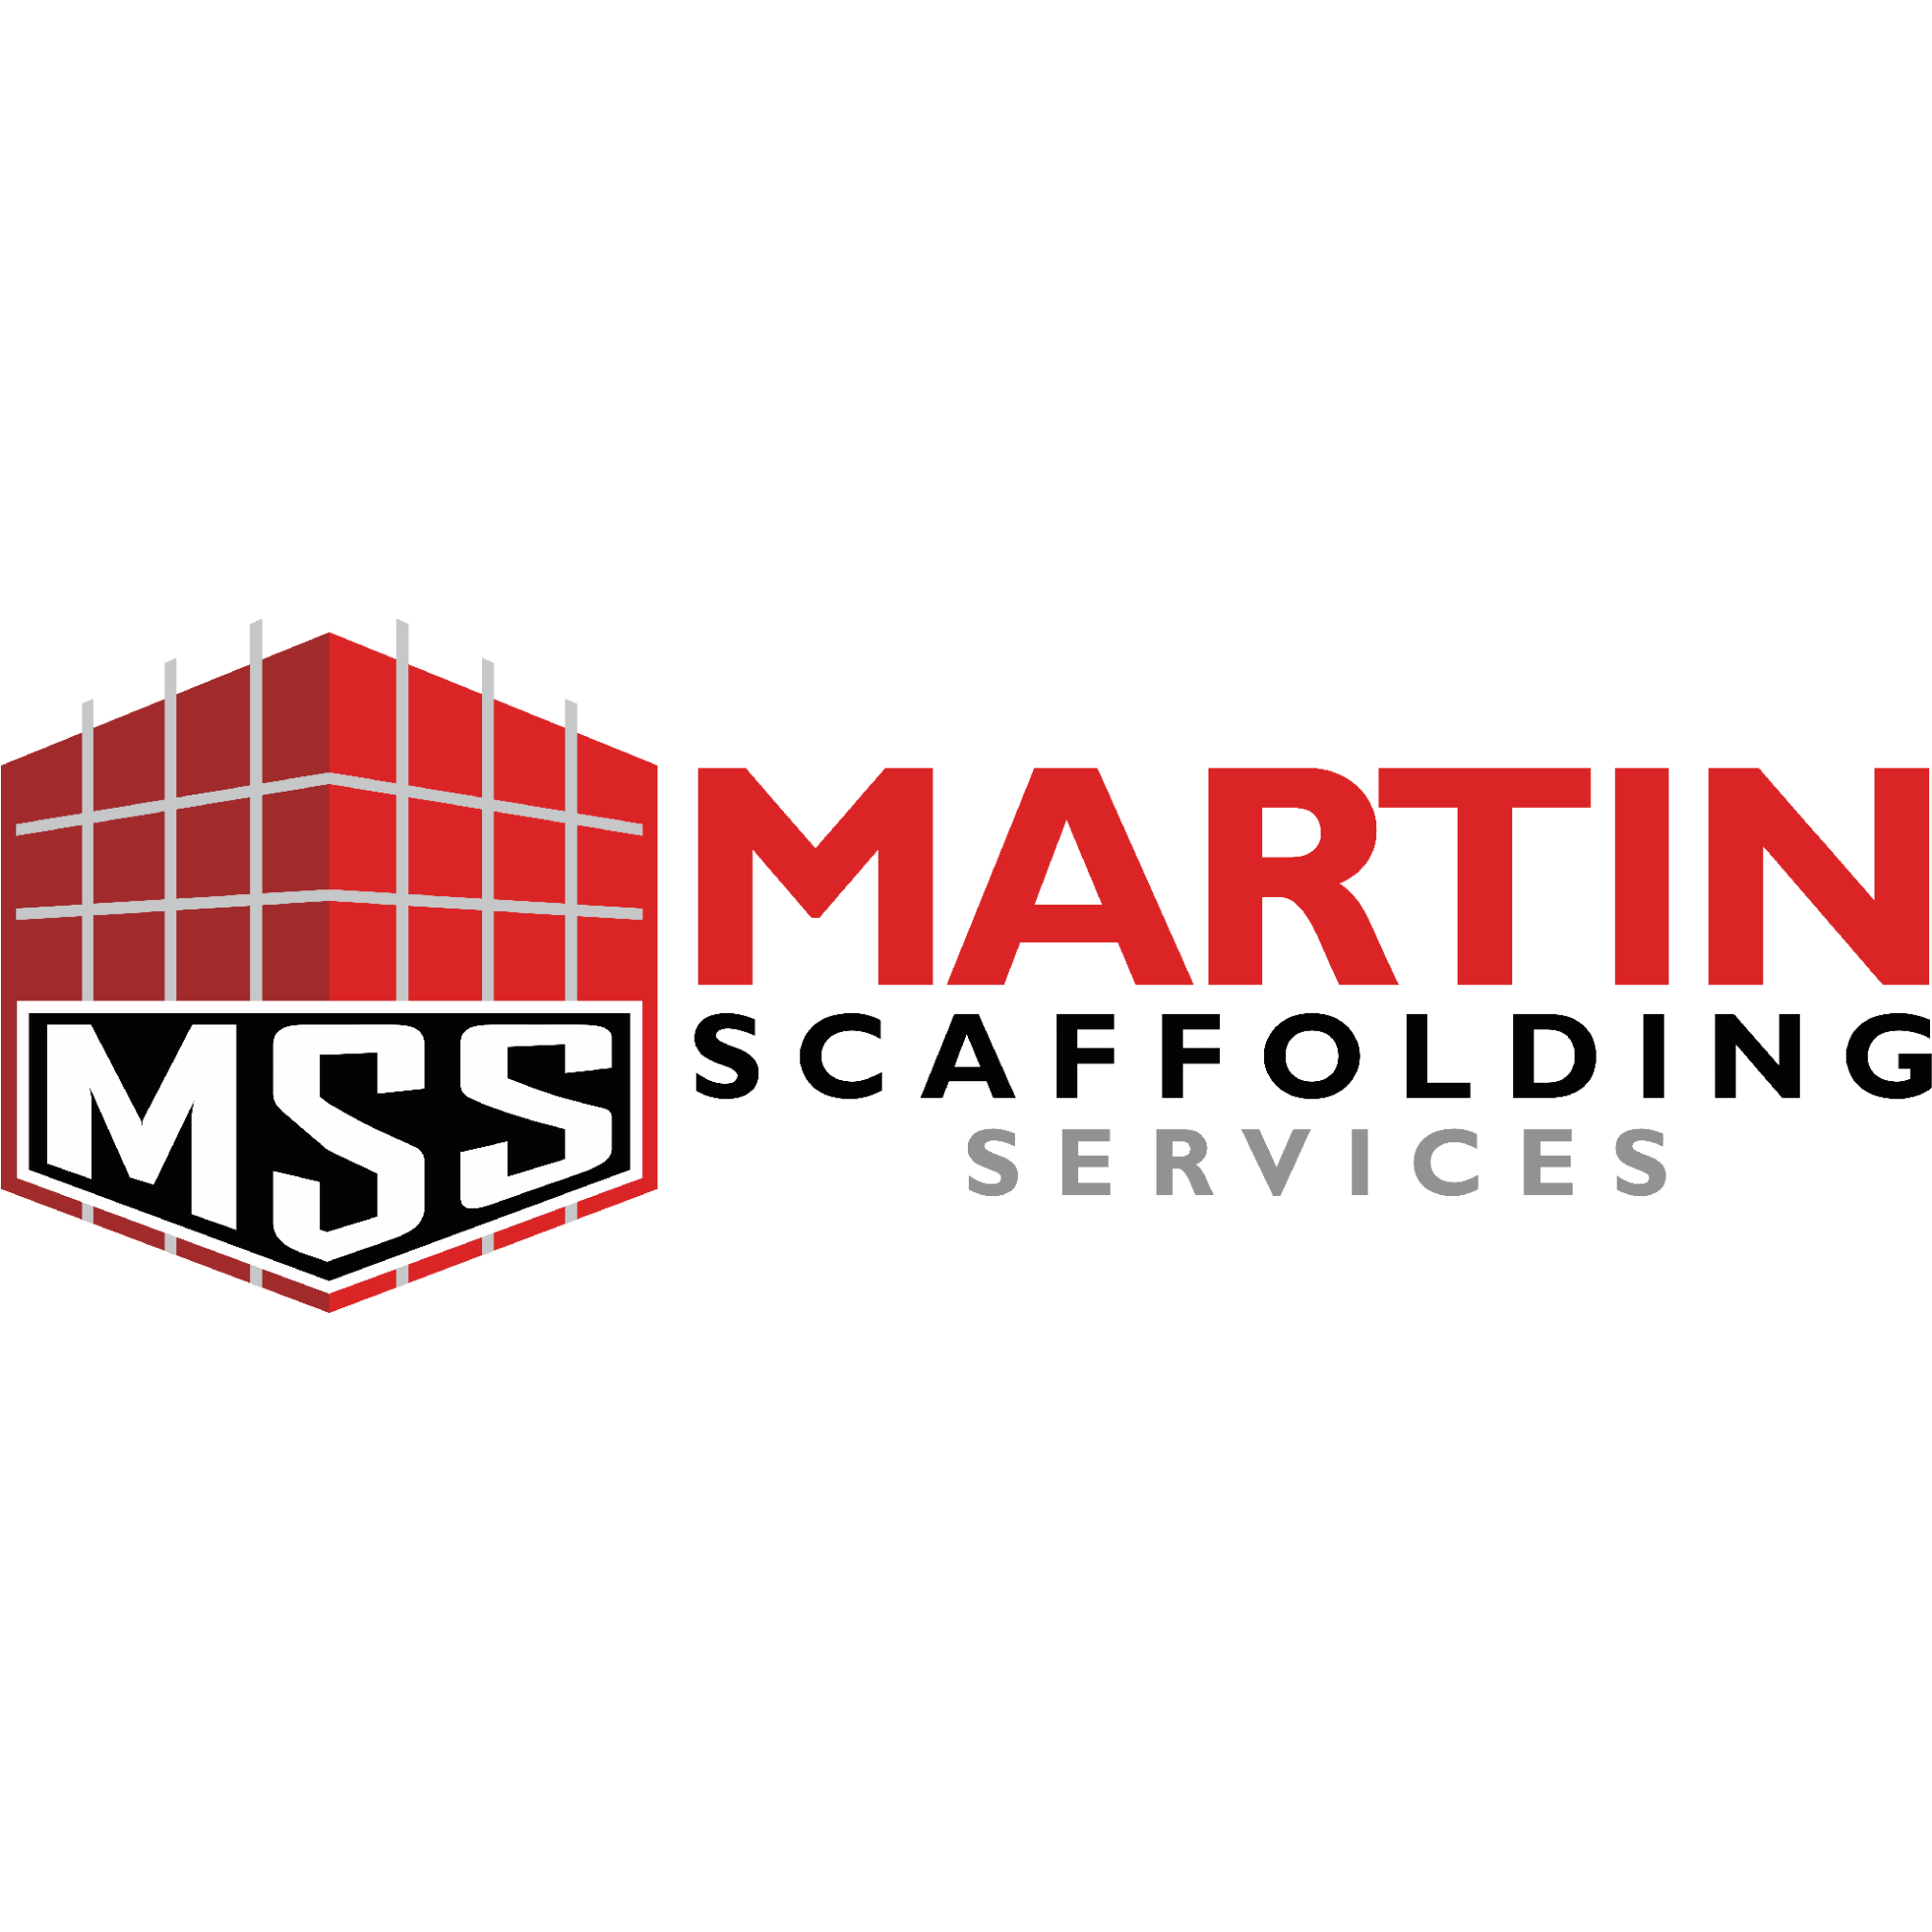 LOGO Martin Scaffolding & Netting Services Oswestry 07960 222947